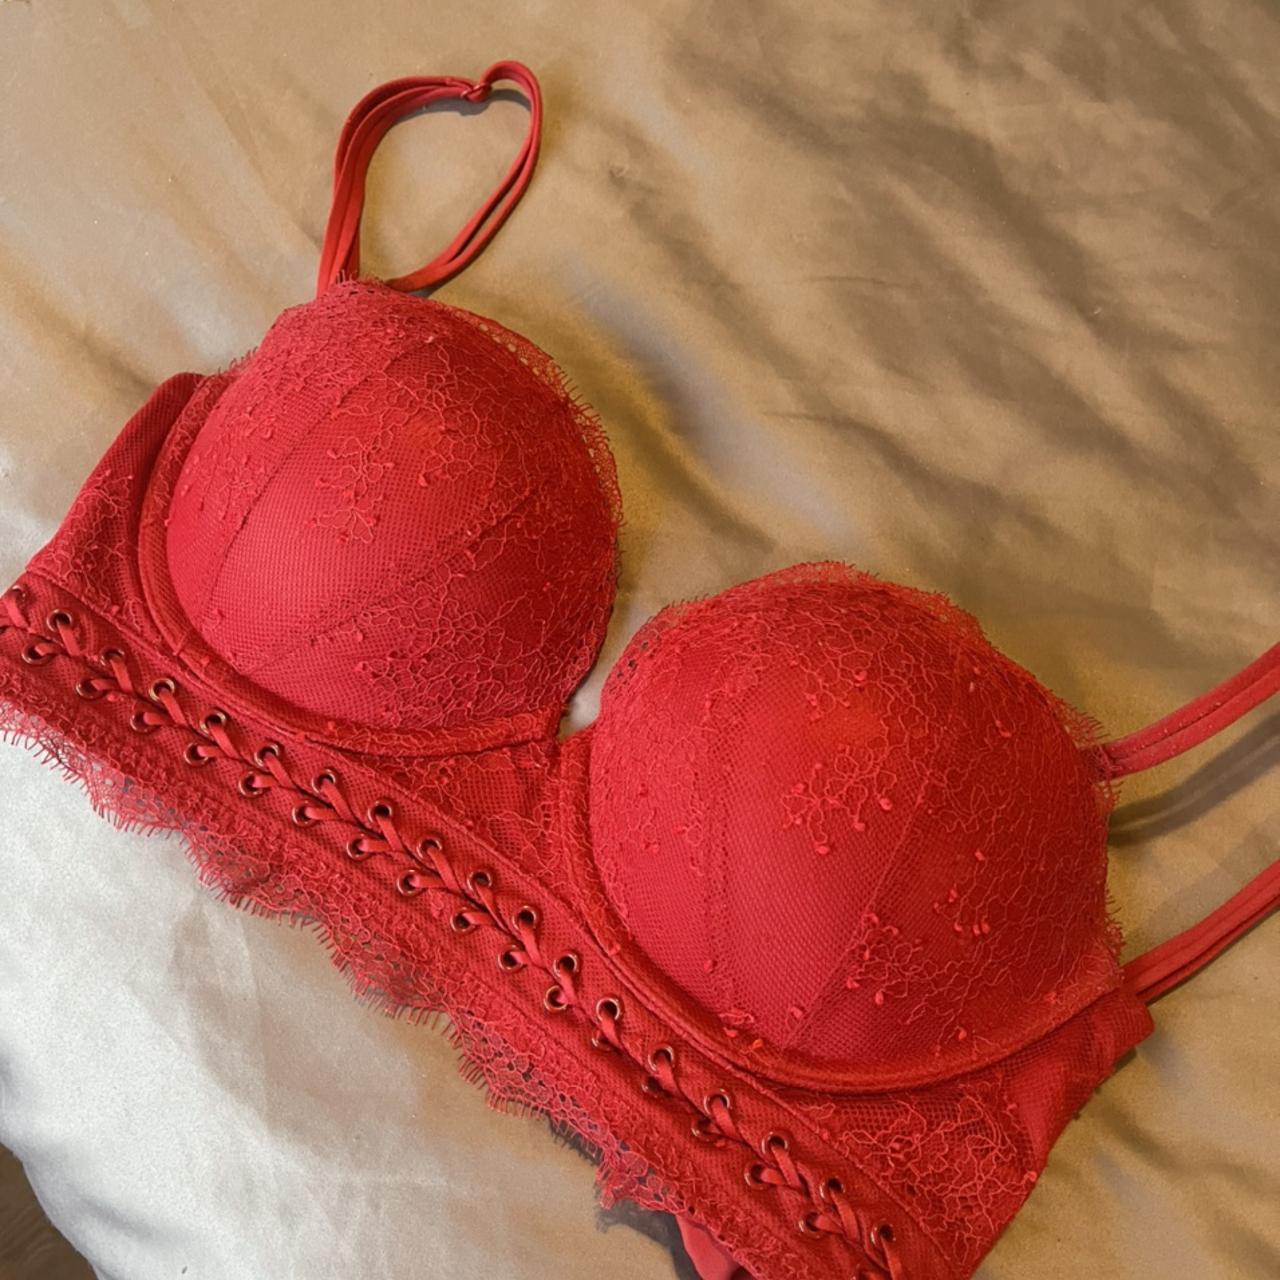 Red Limited Edition Victoria Secret bra